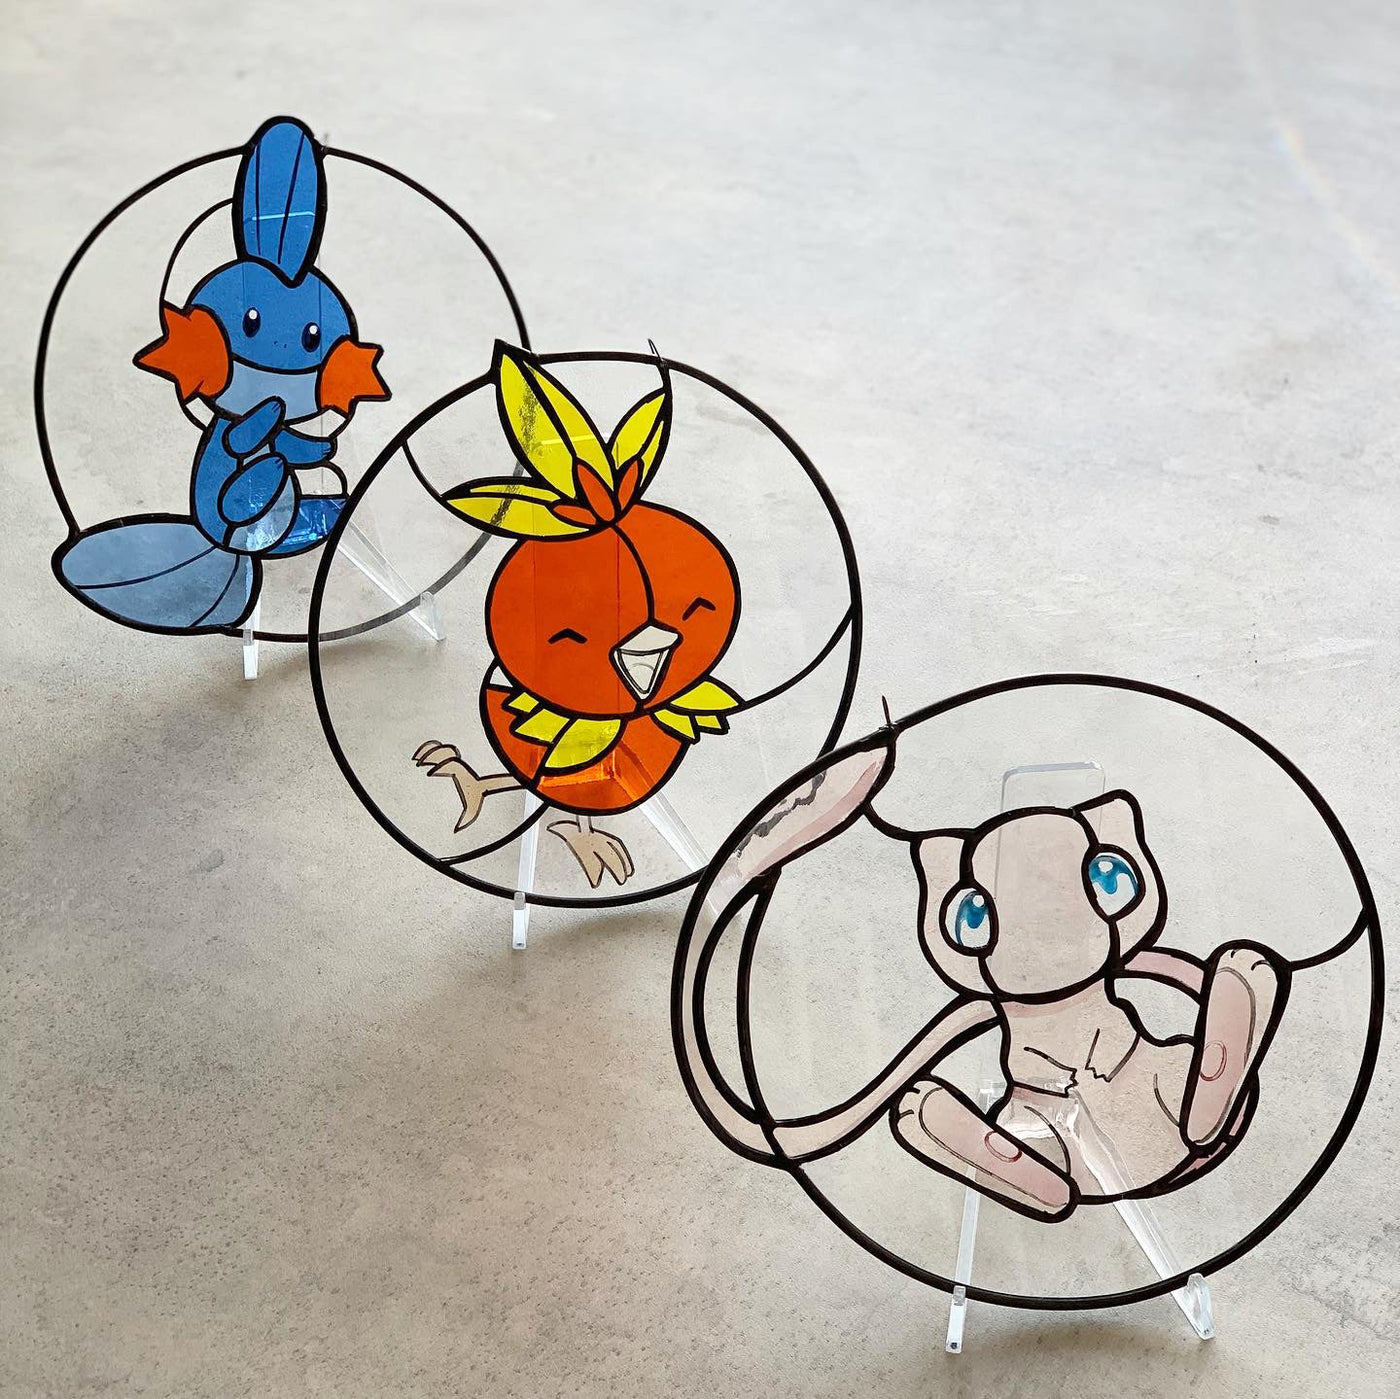 Cute Pokémon stained glass tondo series